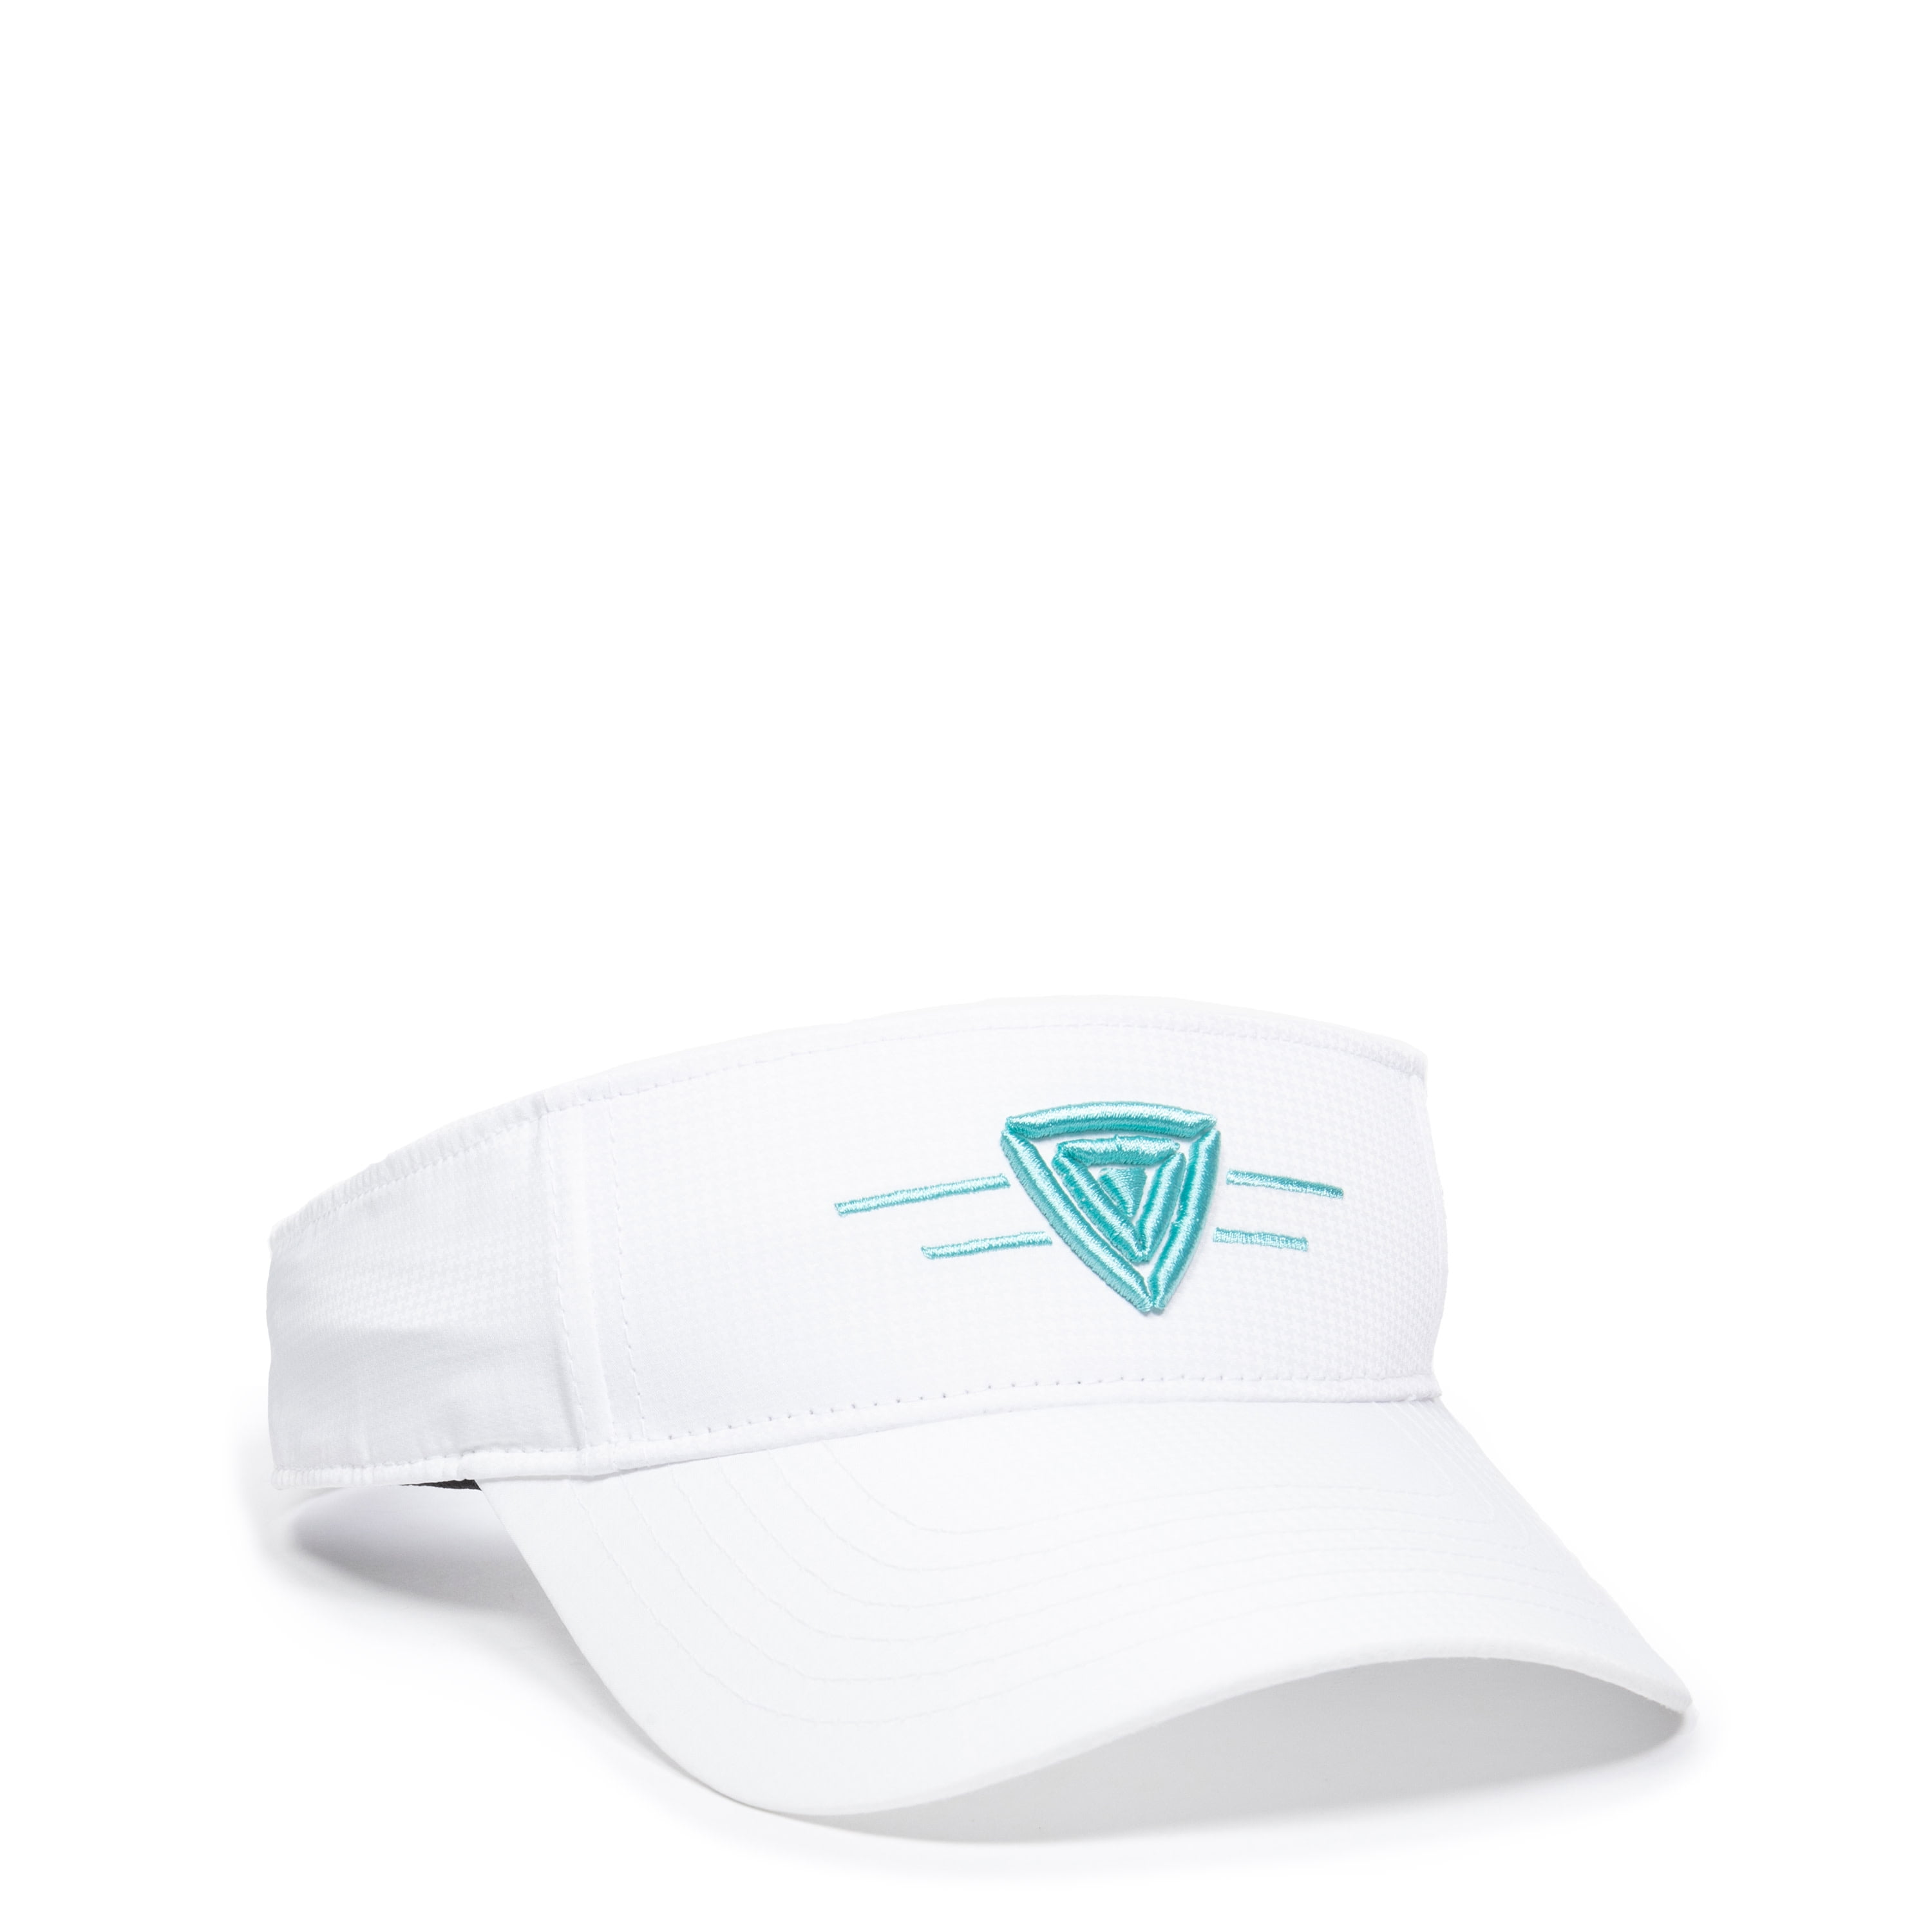 Young Women Men Baseball Cap Sport Adult Snapple-Logos Adjustable Truck Cap Visor Hats 